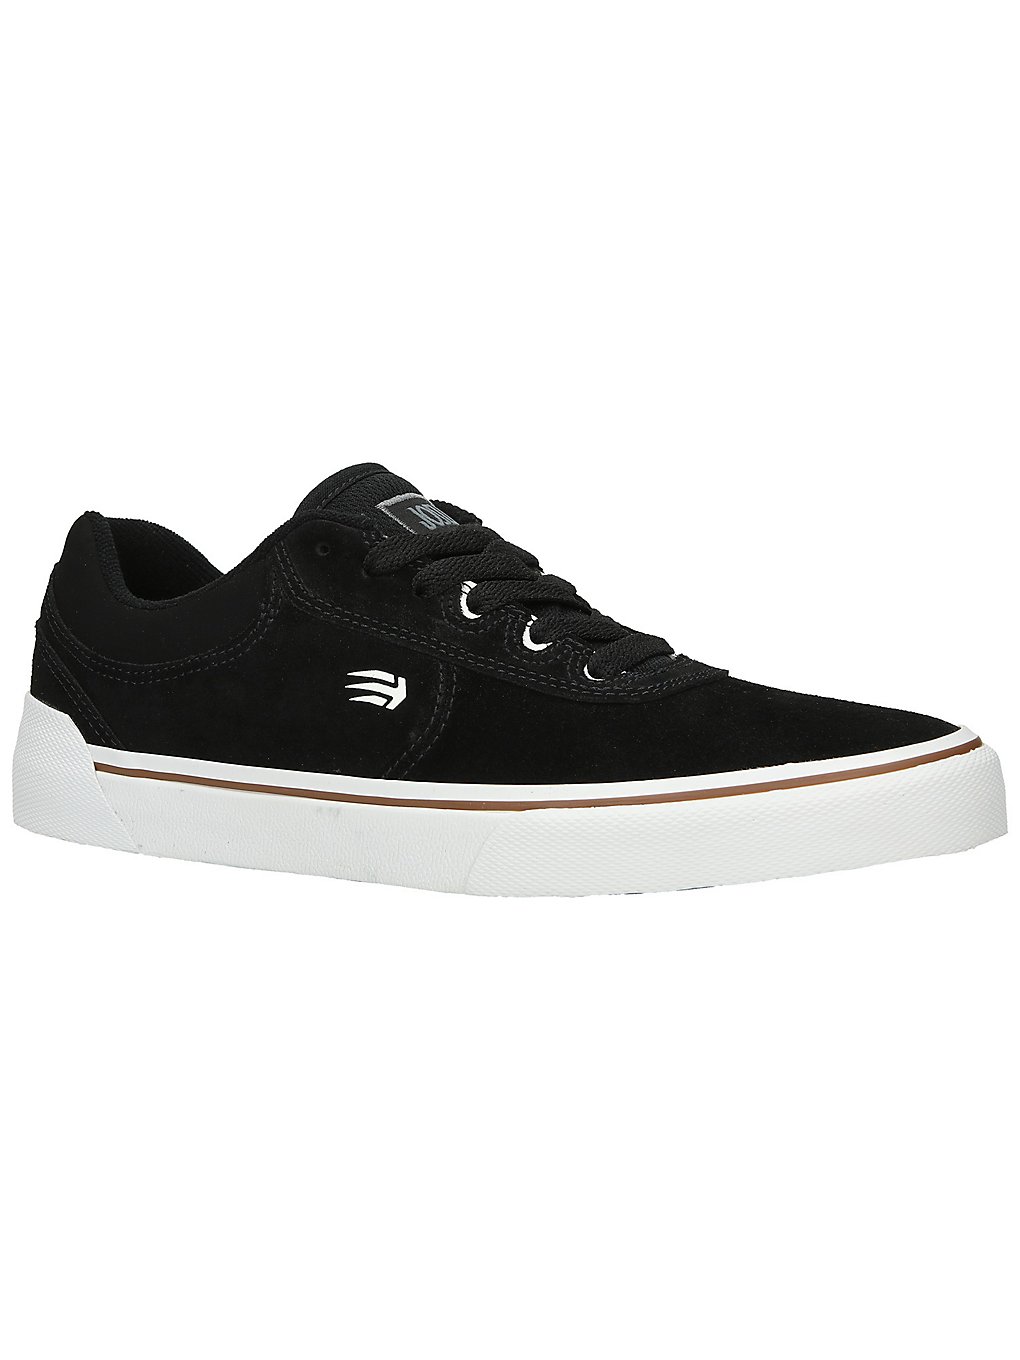 Etnies Joslin Vulc Skate Shoes black